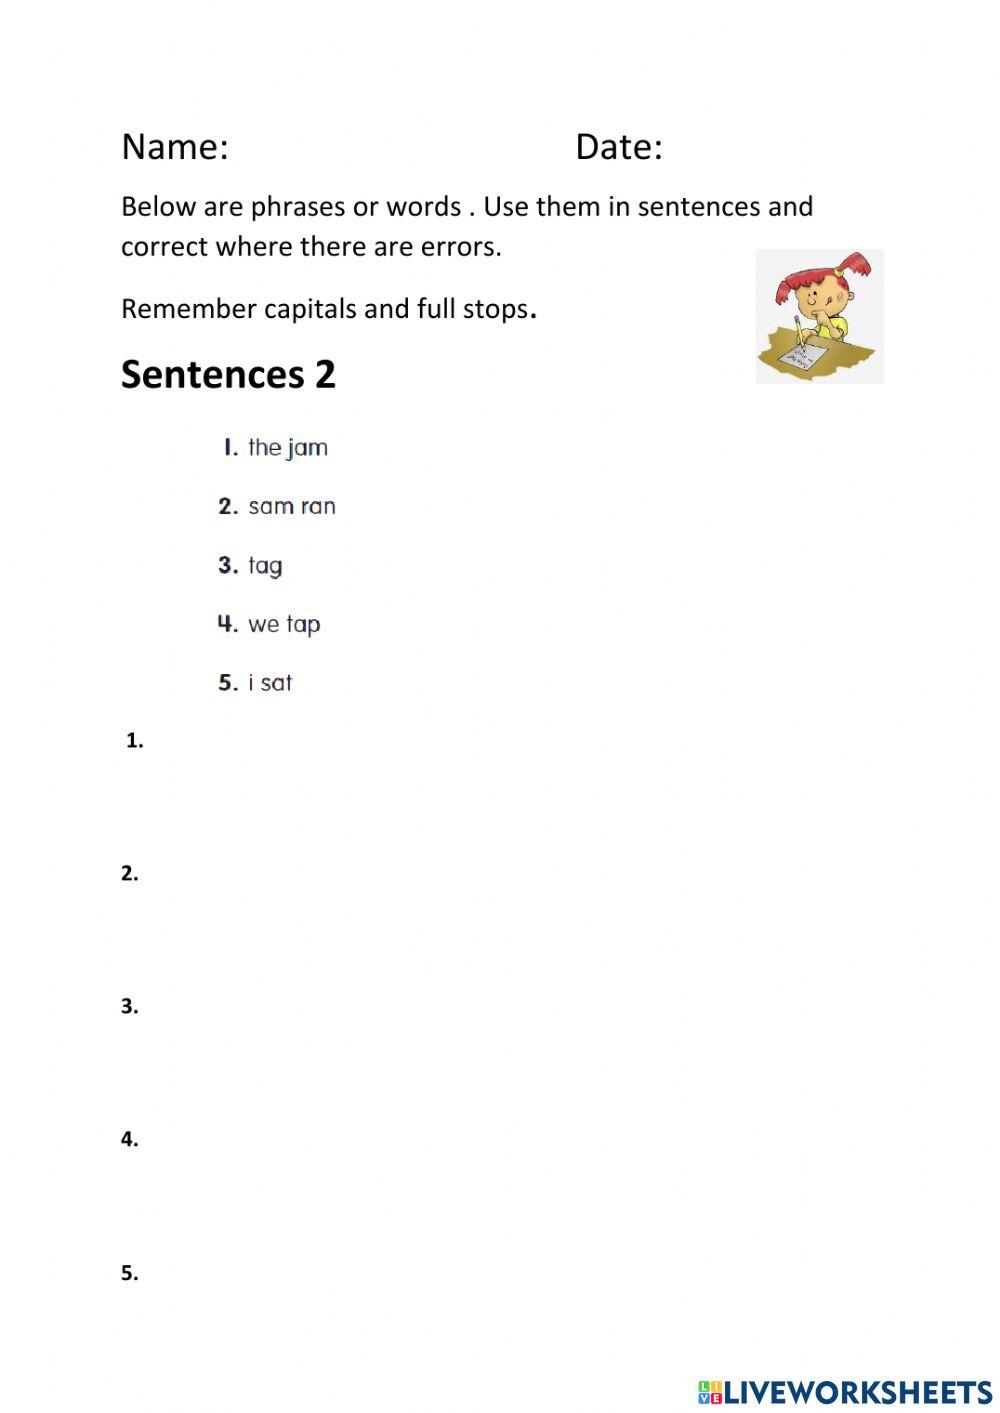 Sentence 2